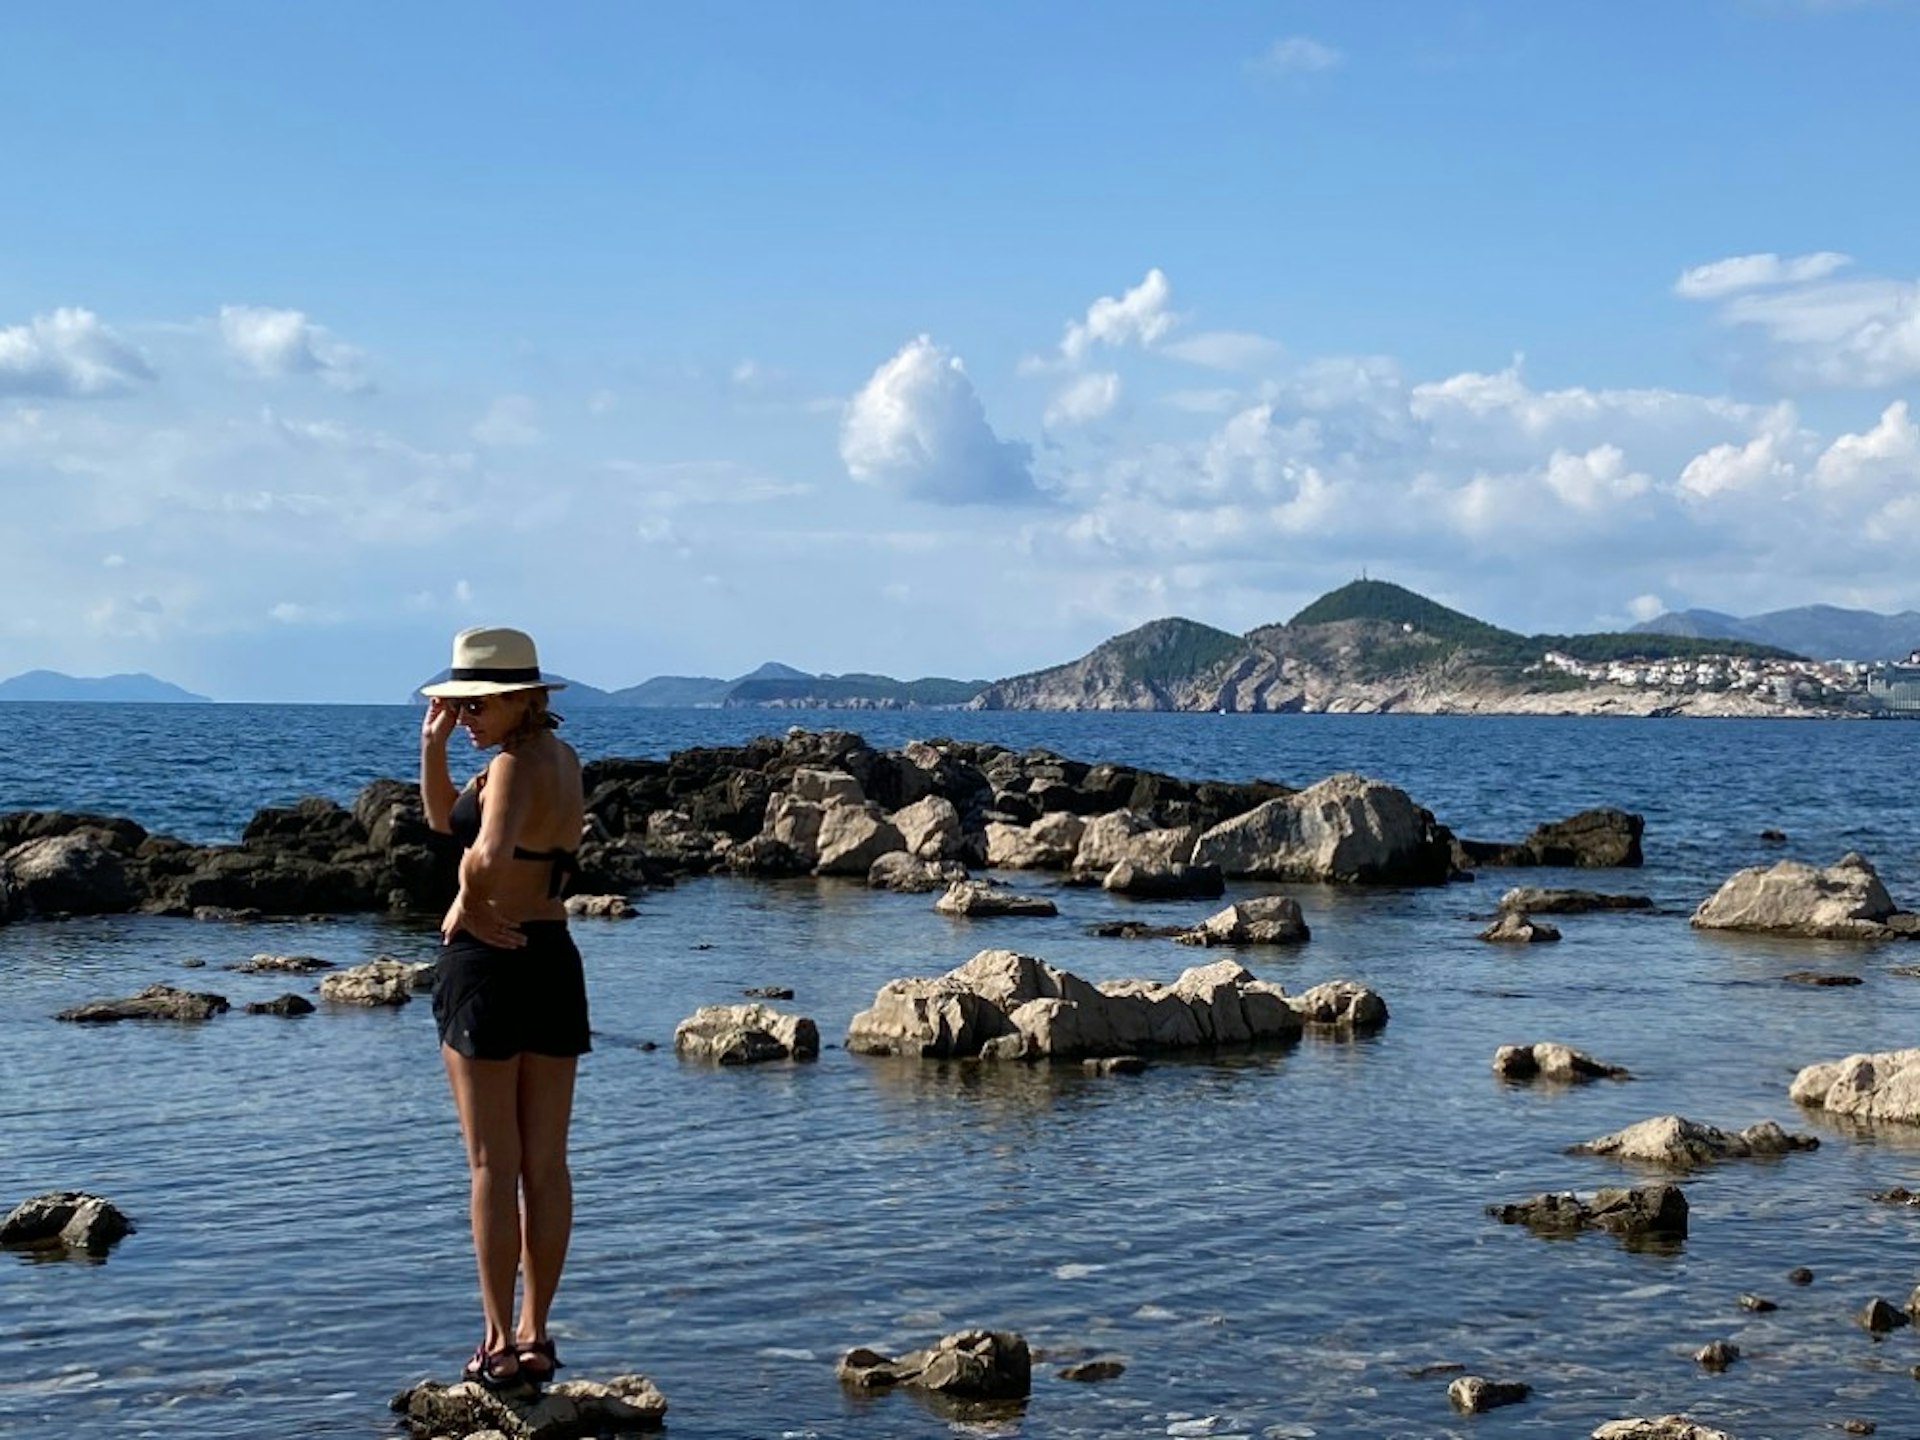 A woman exploring the tide pools on Lokrum Island in Croatia